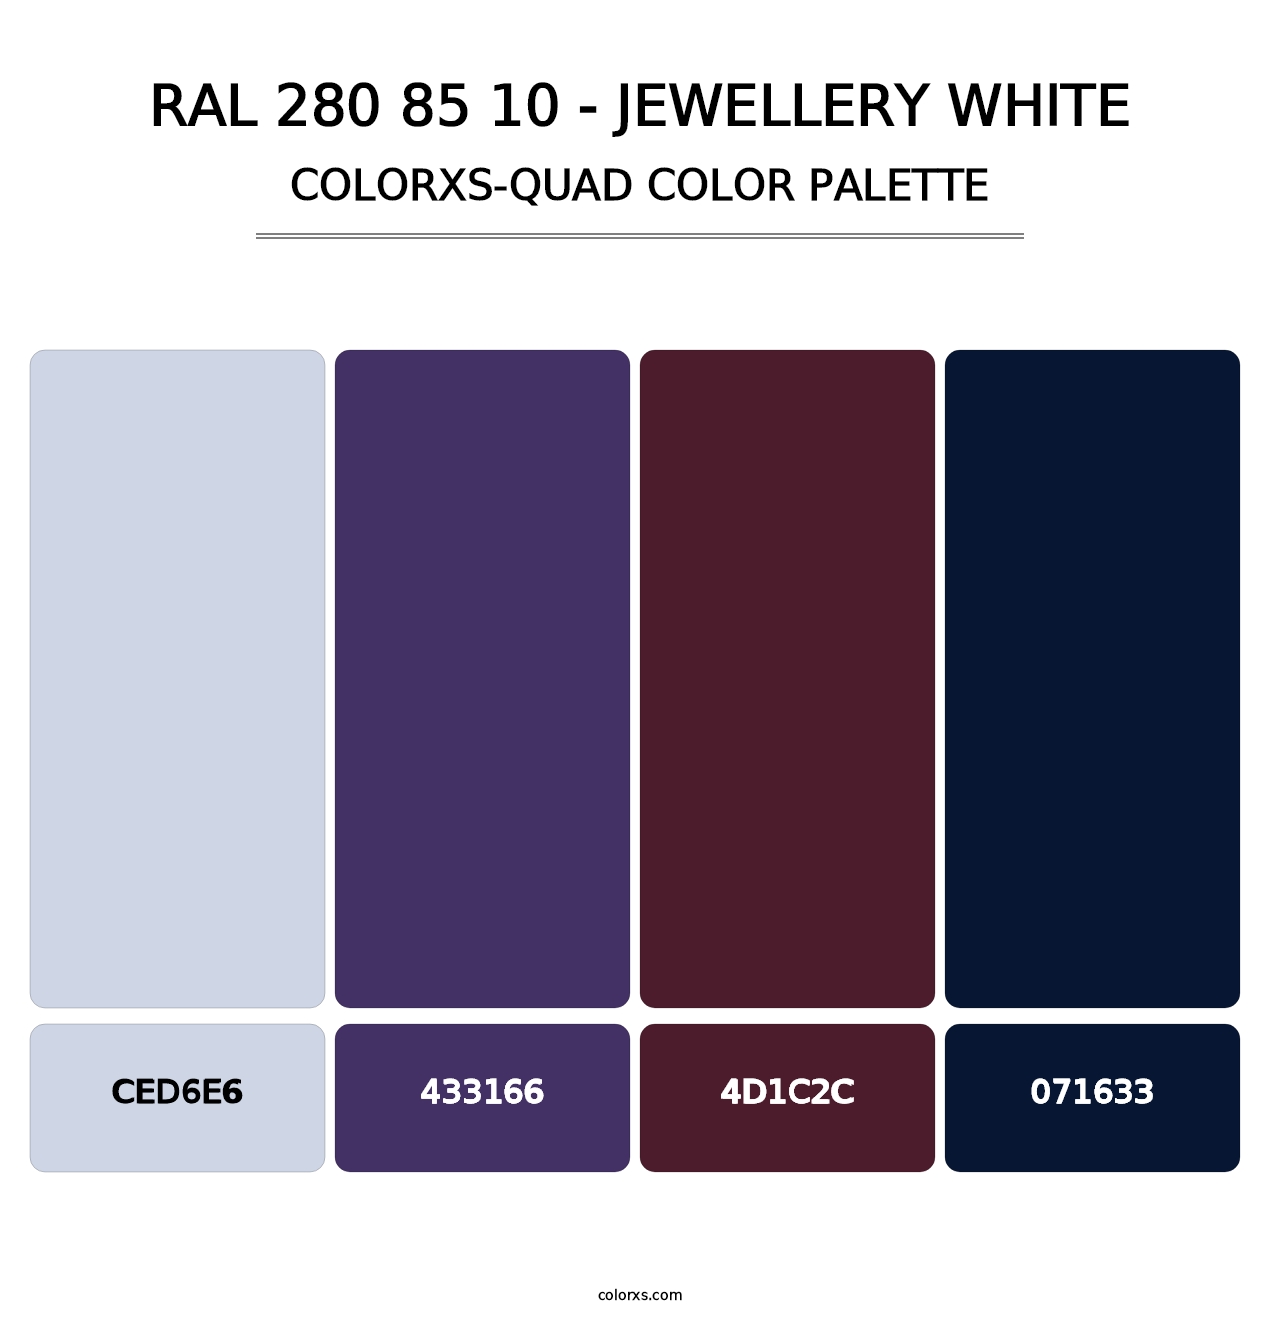 RAL 280 85 10 - Jewellery White - Colorxs Quad Palette